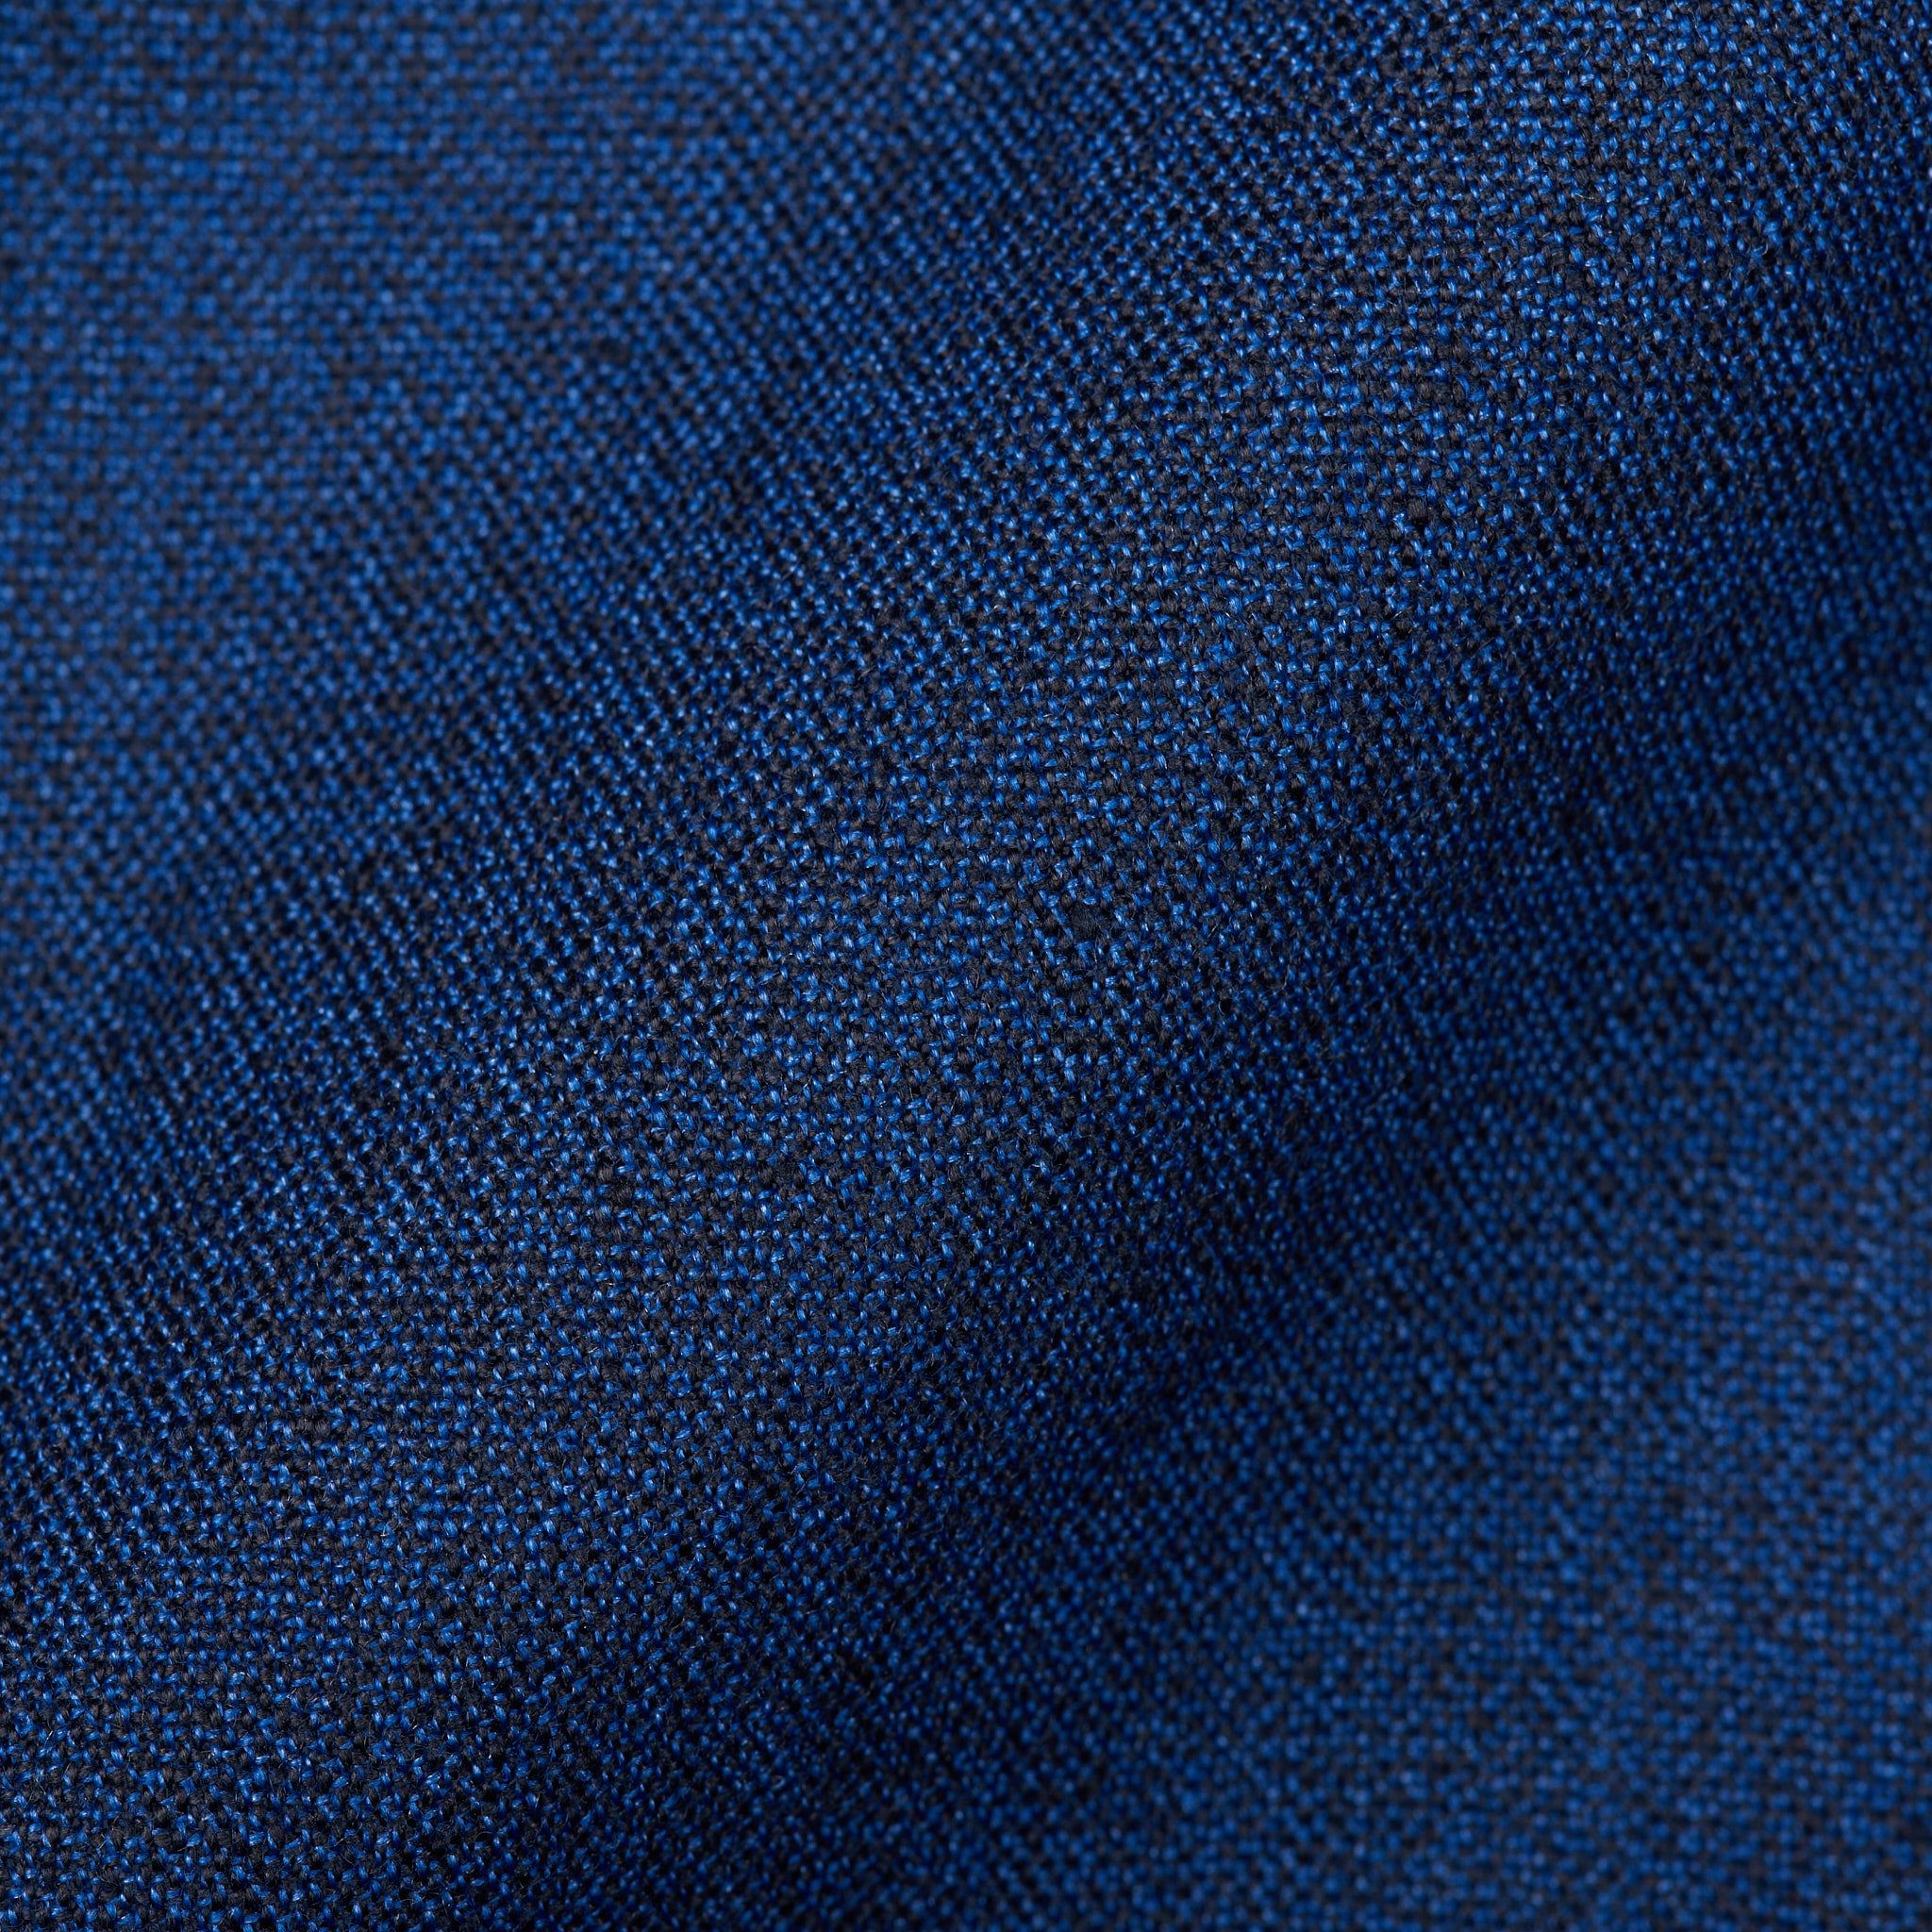 BOGLIOLI Milano "K. Jacket" Blue Linen-Wool-Silk Unlined Jacket EU 48 NEW US 38 BOGLIOLI